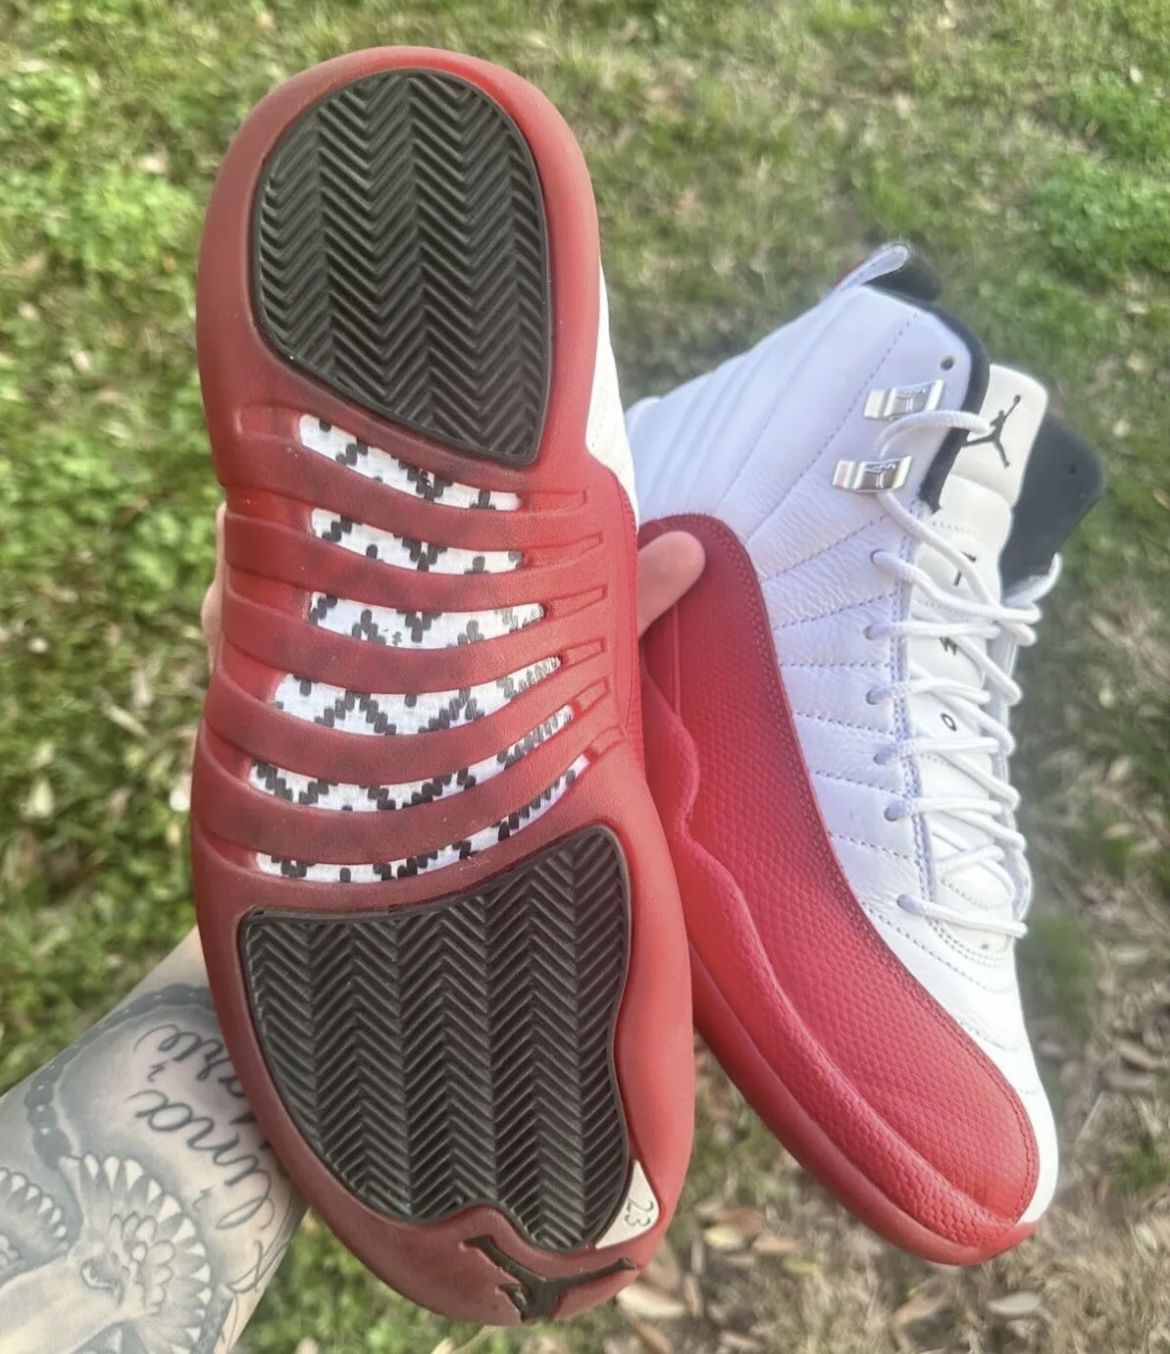 Air Jordan Retro 12s Size 10 